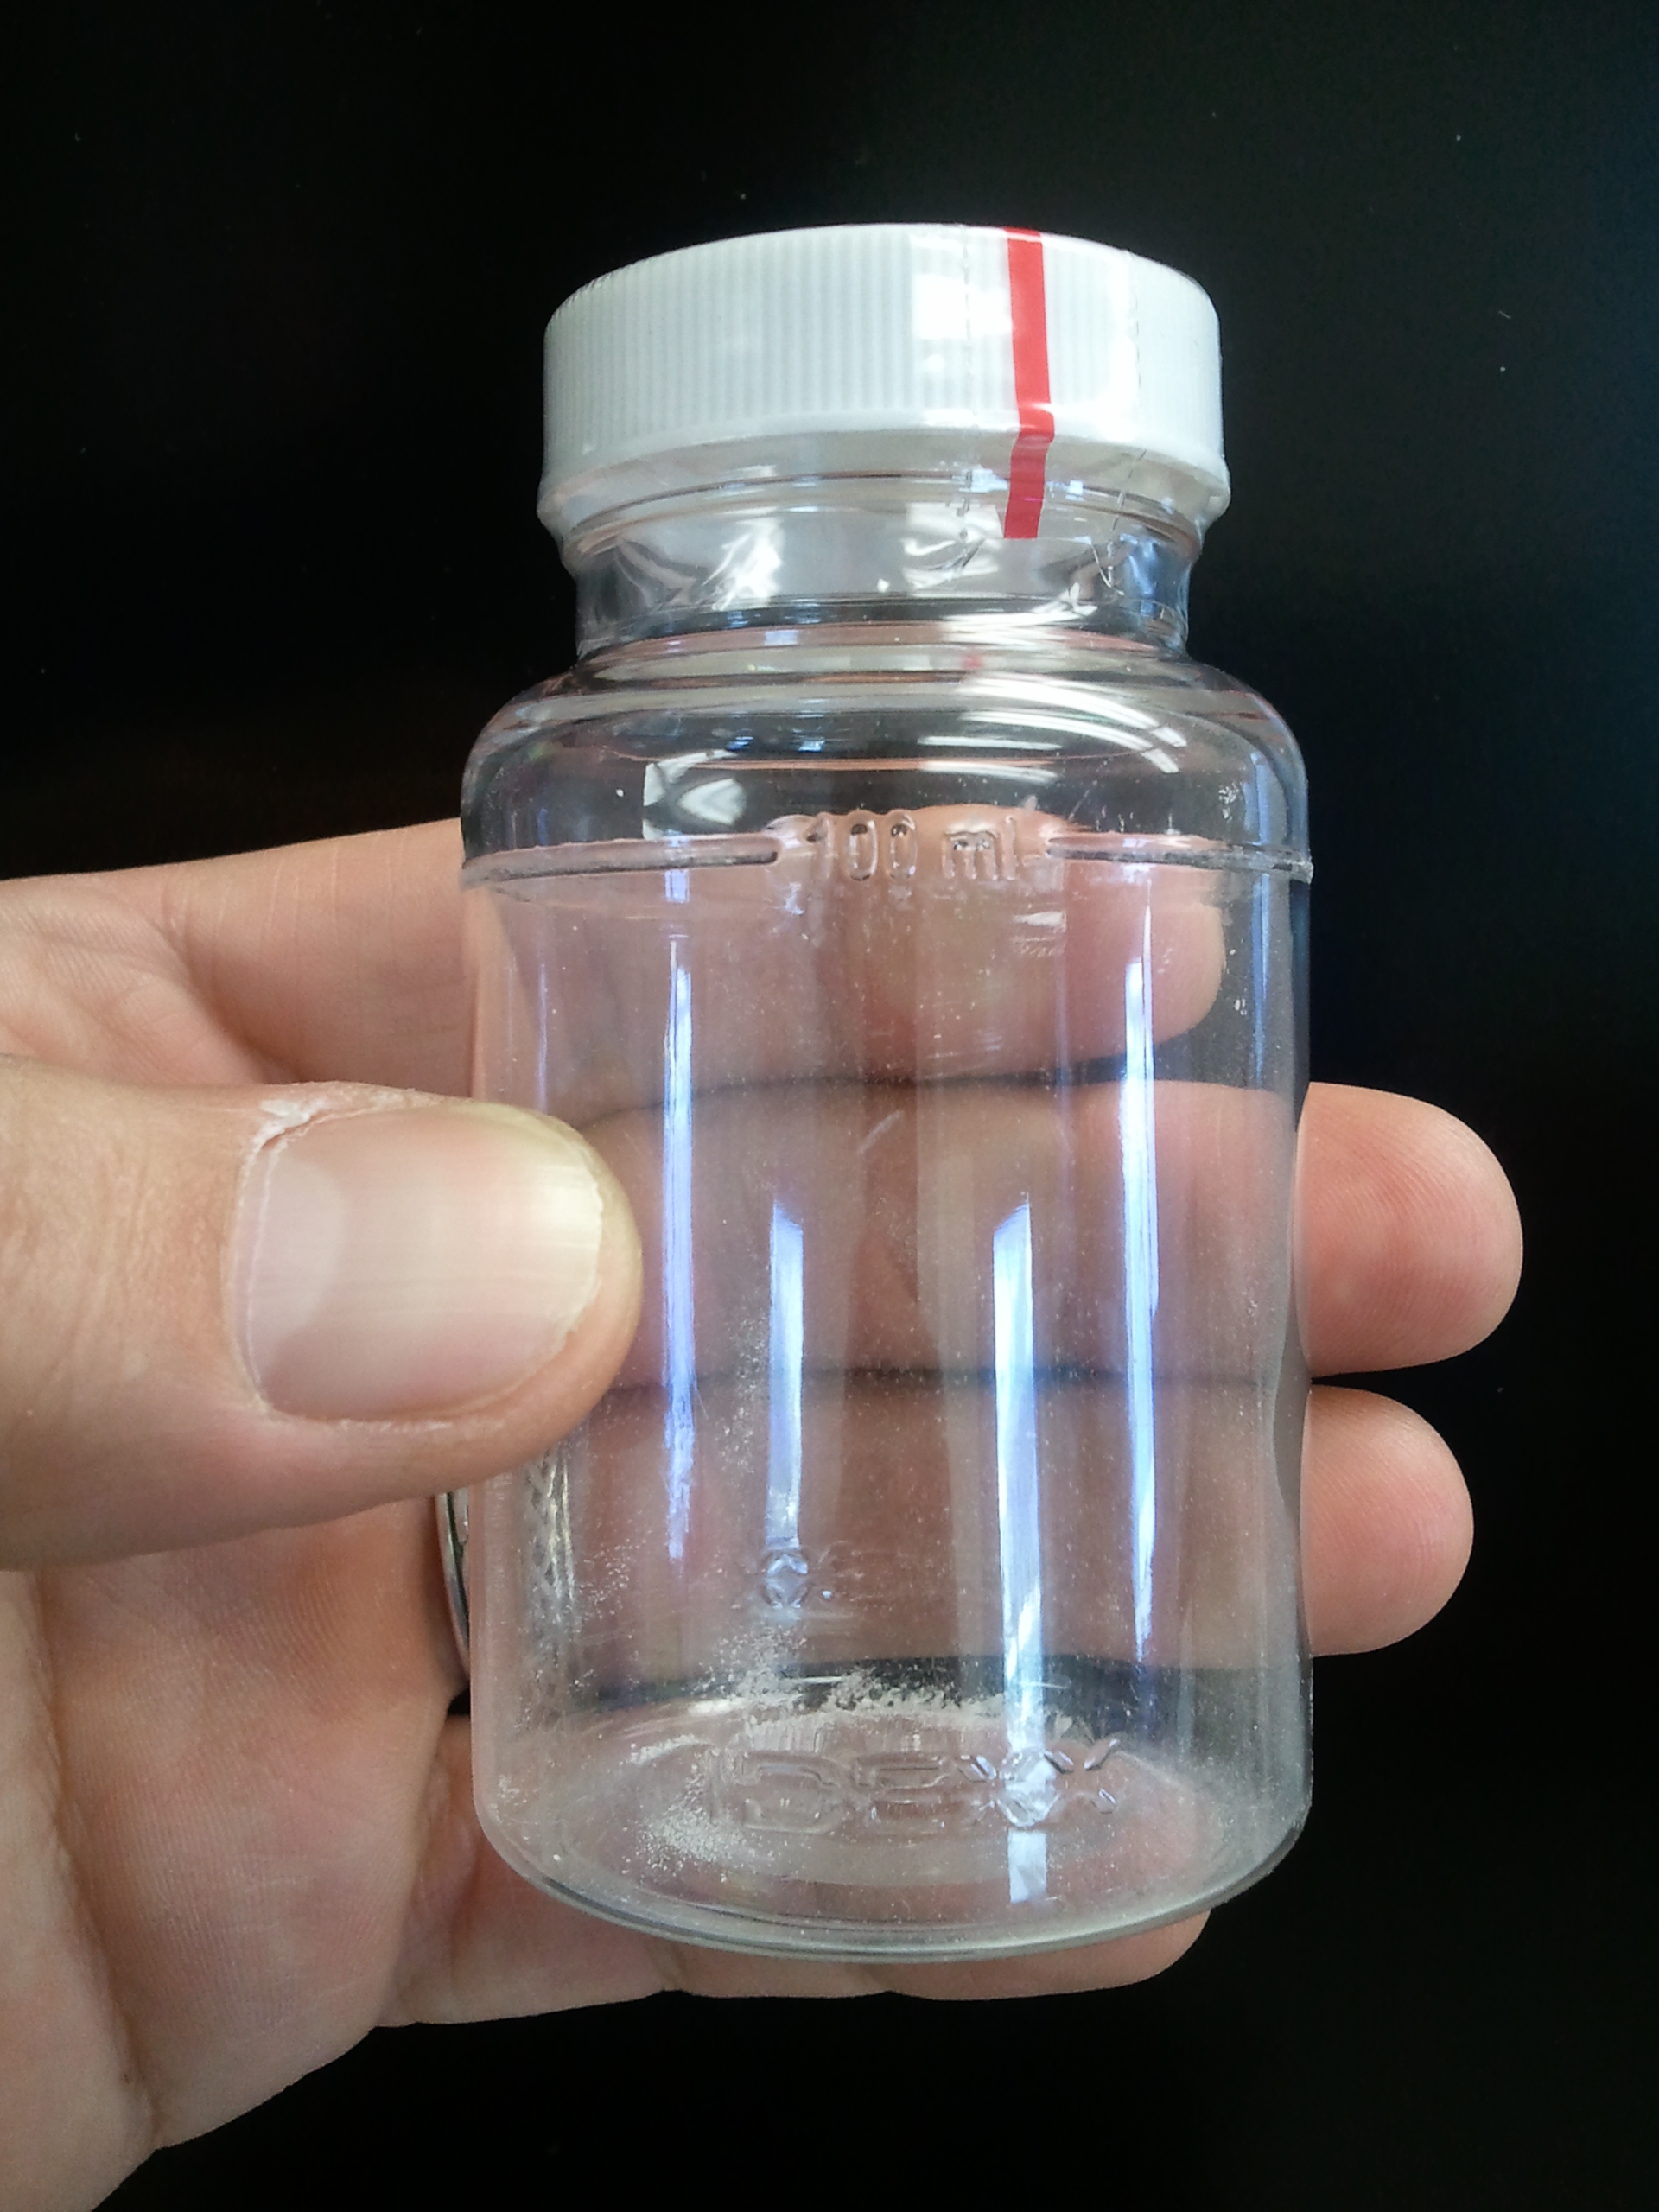 water sample bottle sampling compliance samples source 100ml bacteria coliform utility regulatory monitoring form services